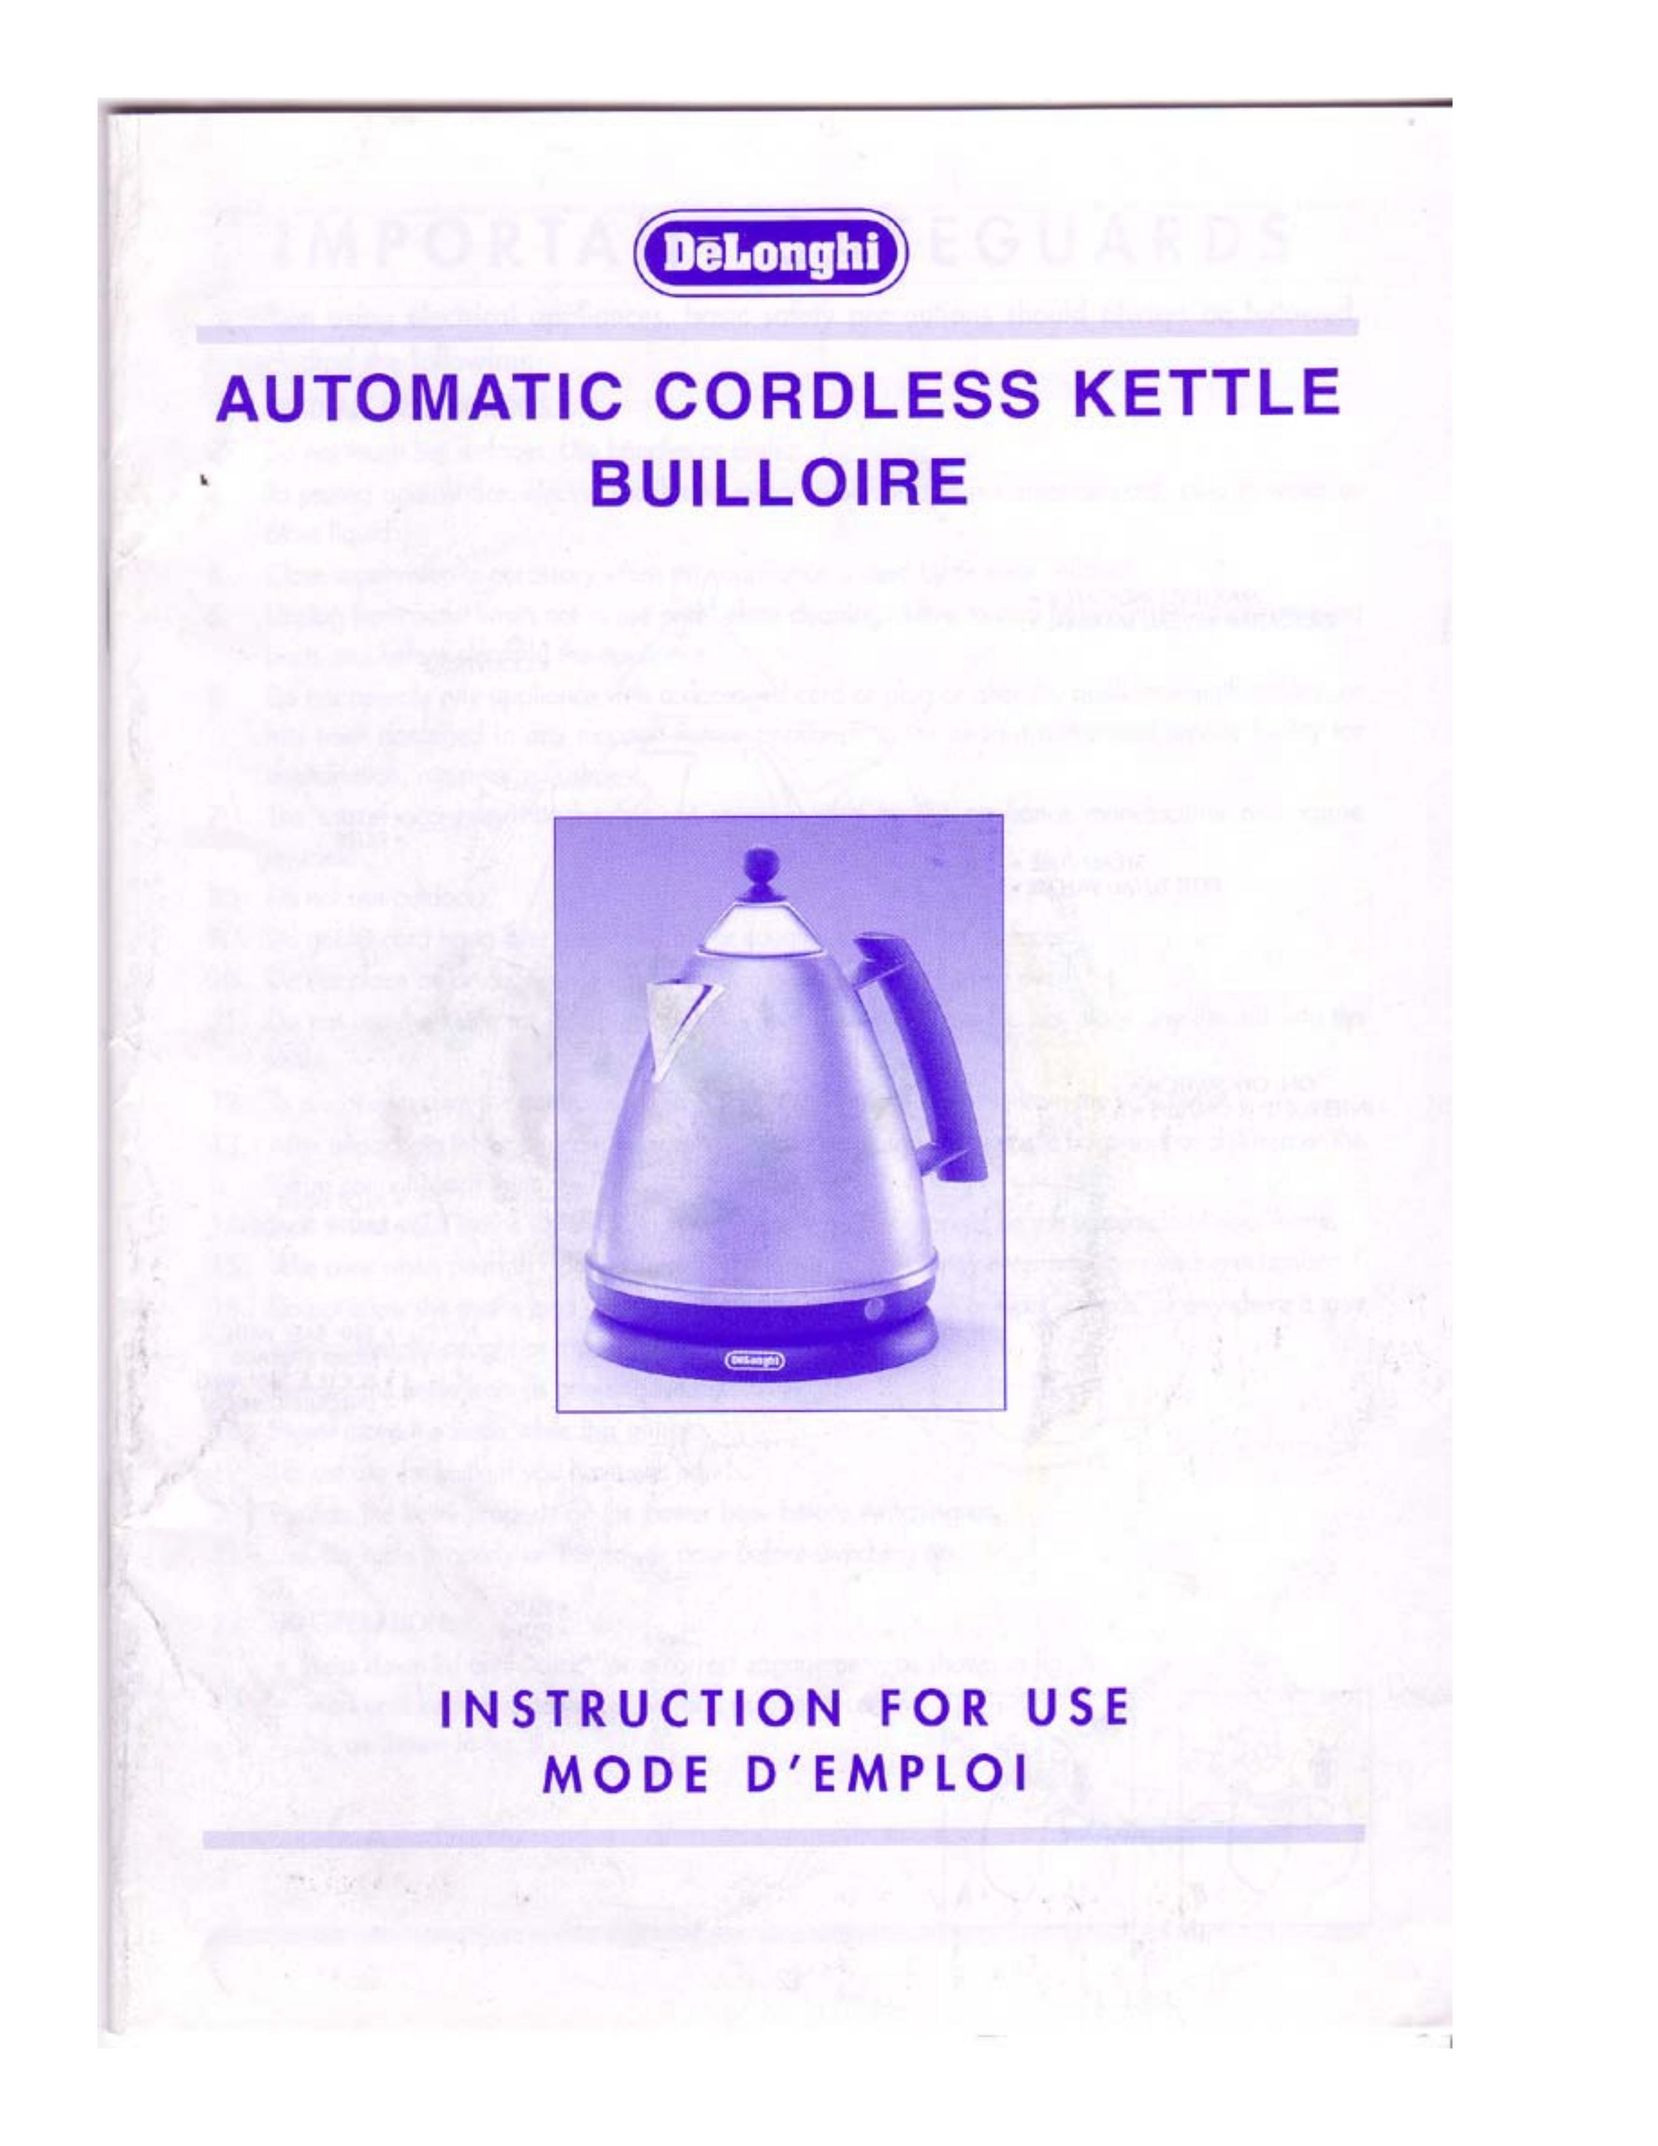 DeLonghi Cordless Kettle Builloire Hot Beverage Maker User Manual